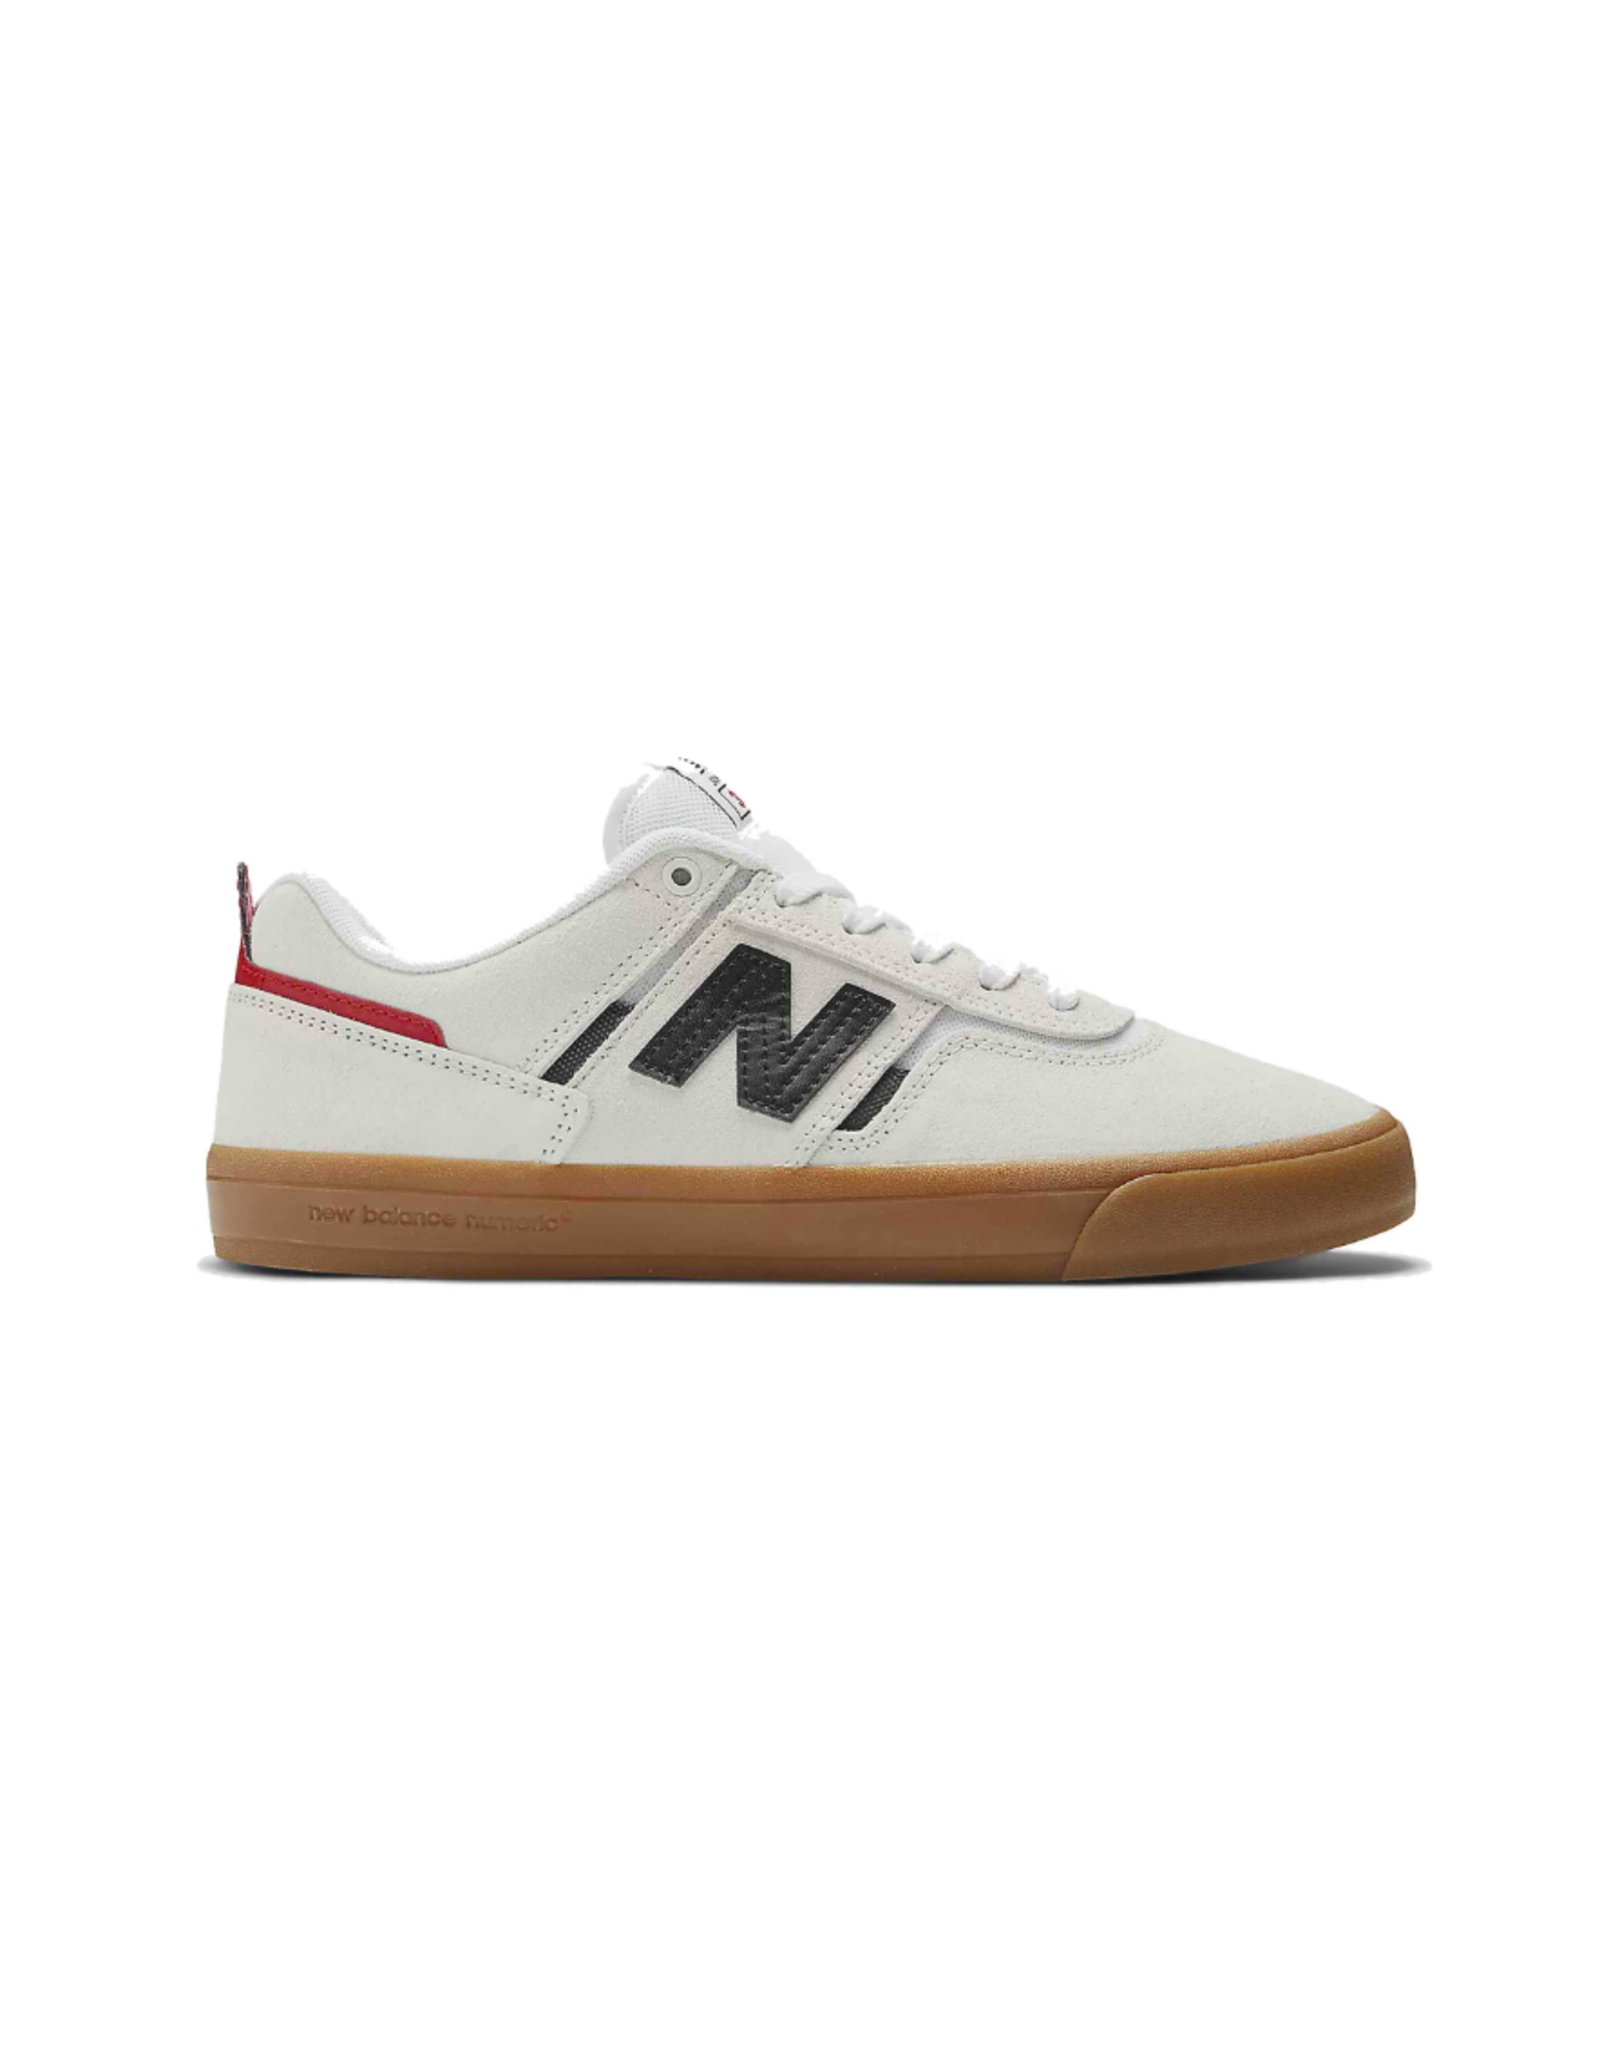 New Balance Men's Numeric Jamie Foy 306 Shoes White/Black